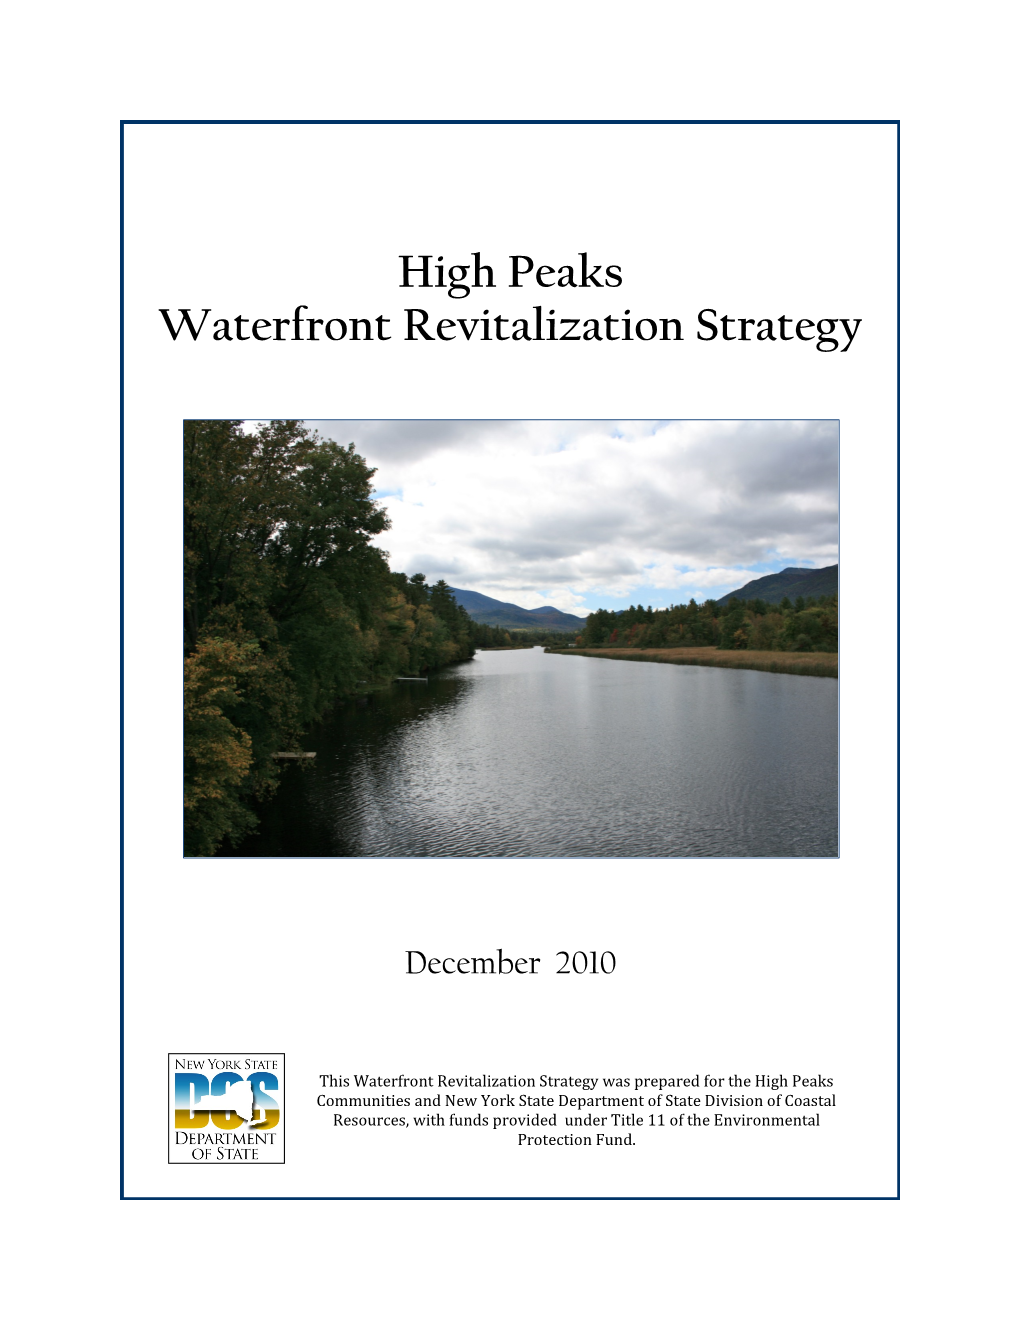 High Peaks Waterfront Revitalization Strategy